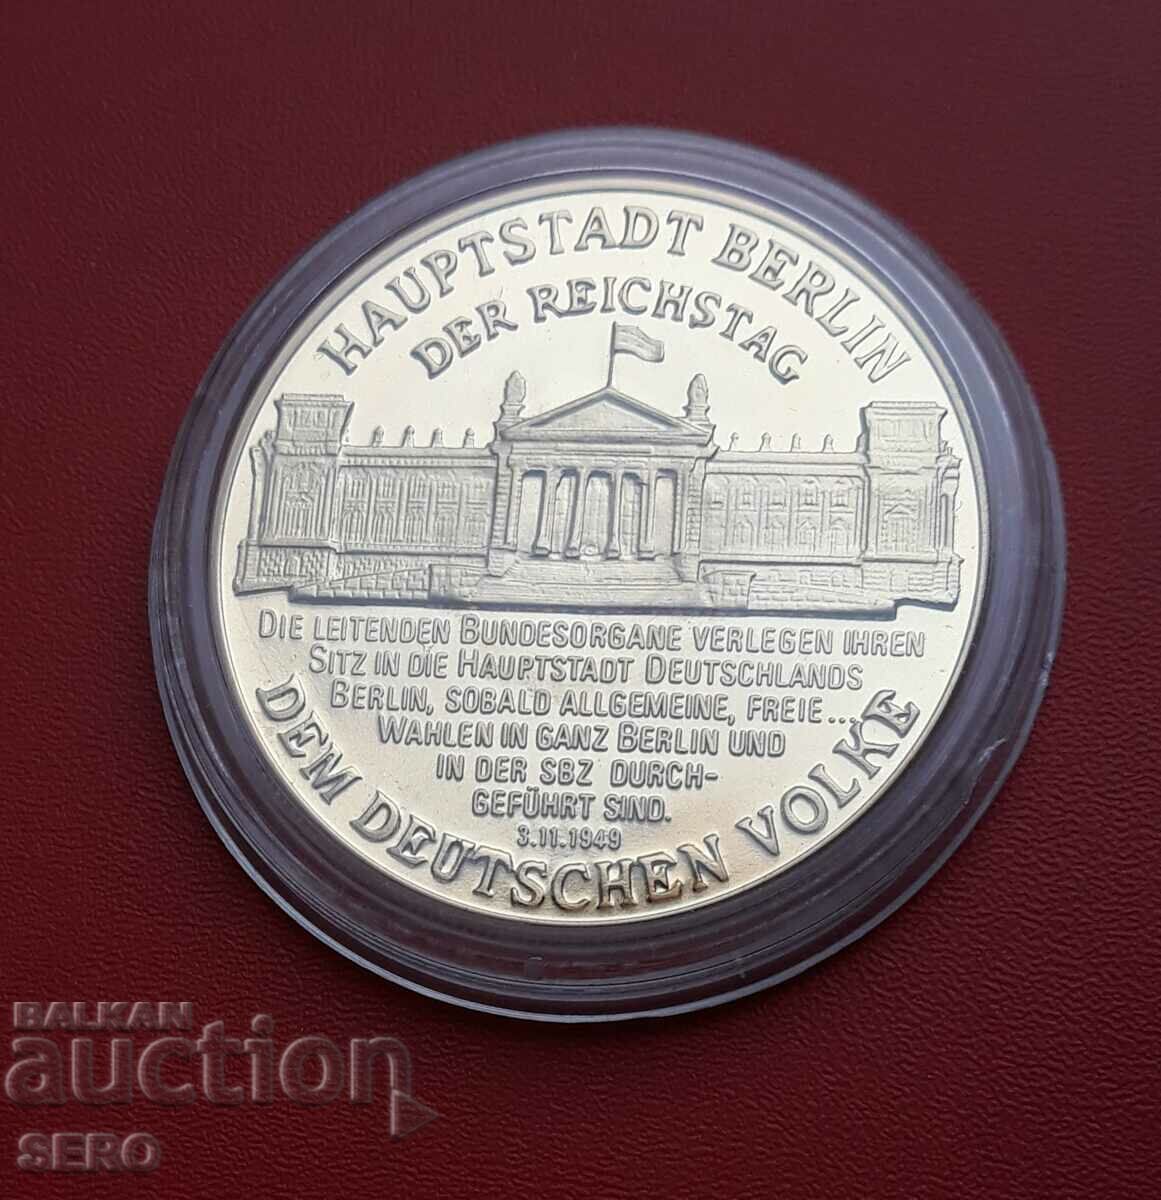 Германия-медал "Обединена Германия"-Берлин-Райхстага